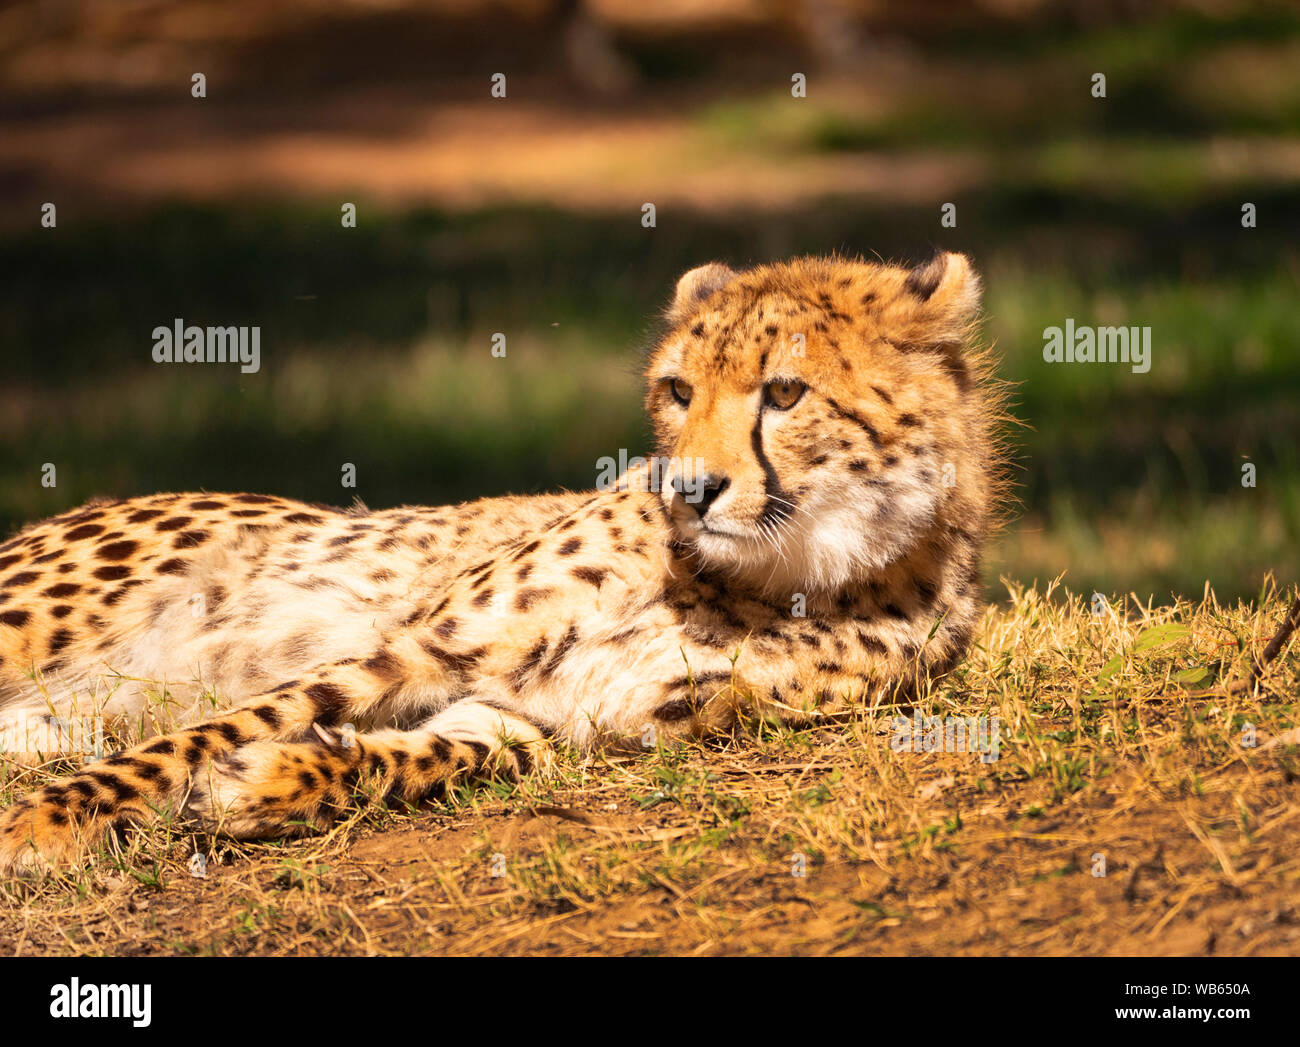 A vulnerable Cheetah, Acinonyx jubatus, lying down resting while also alert in a captive breeding program. Stock Photo